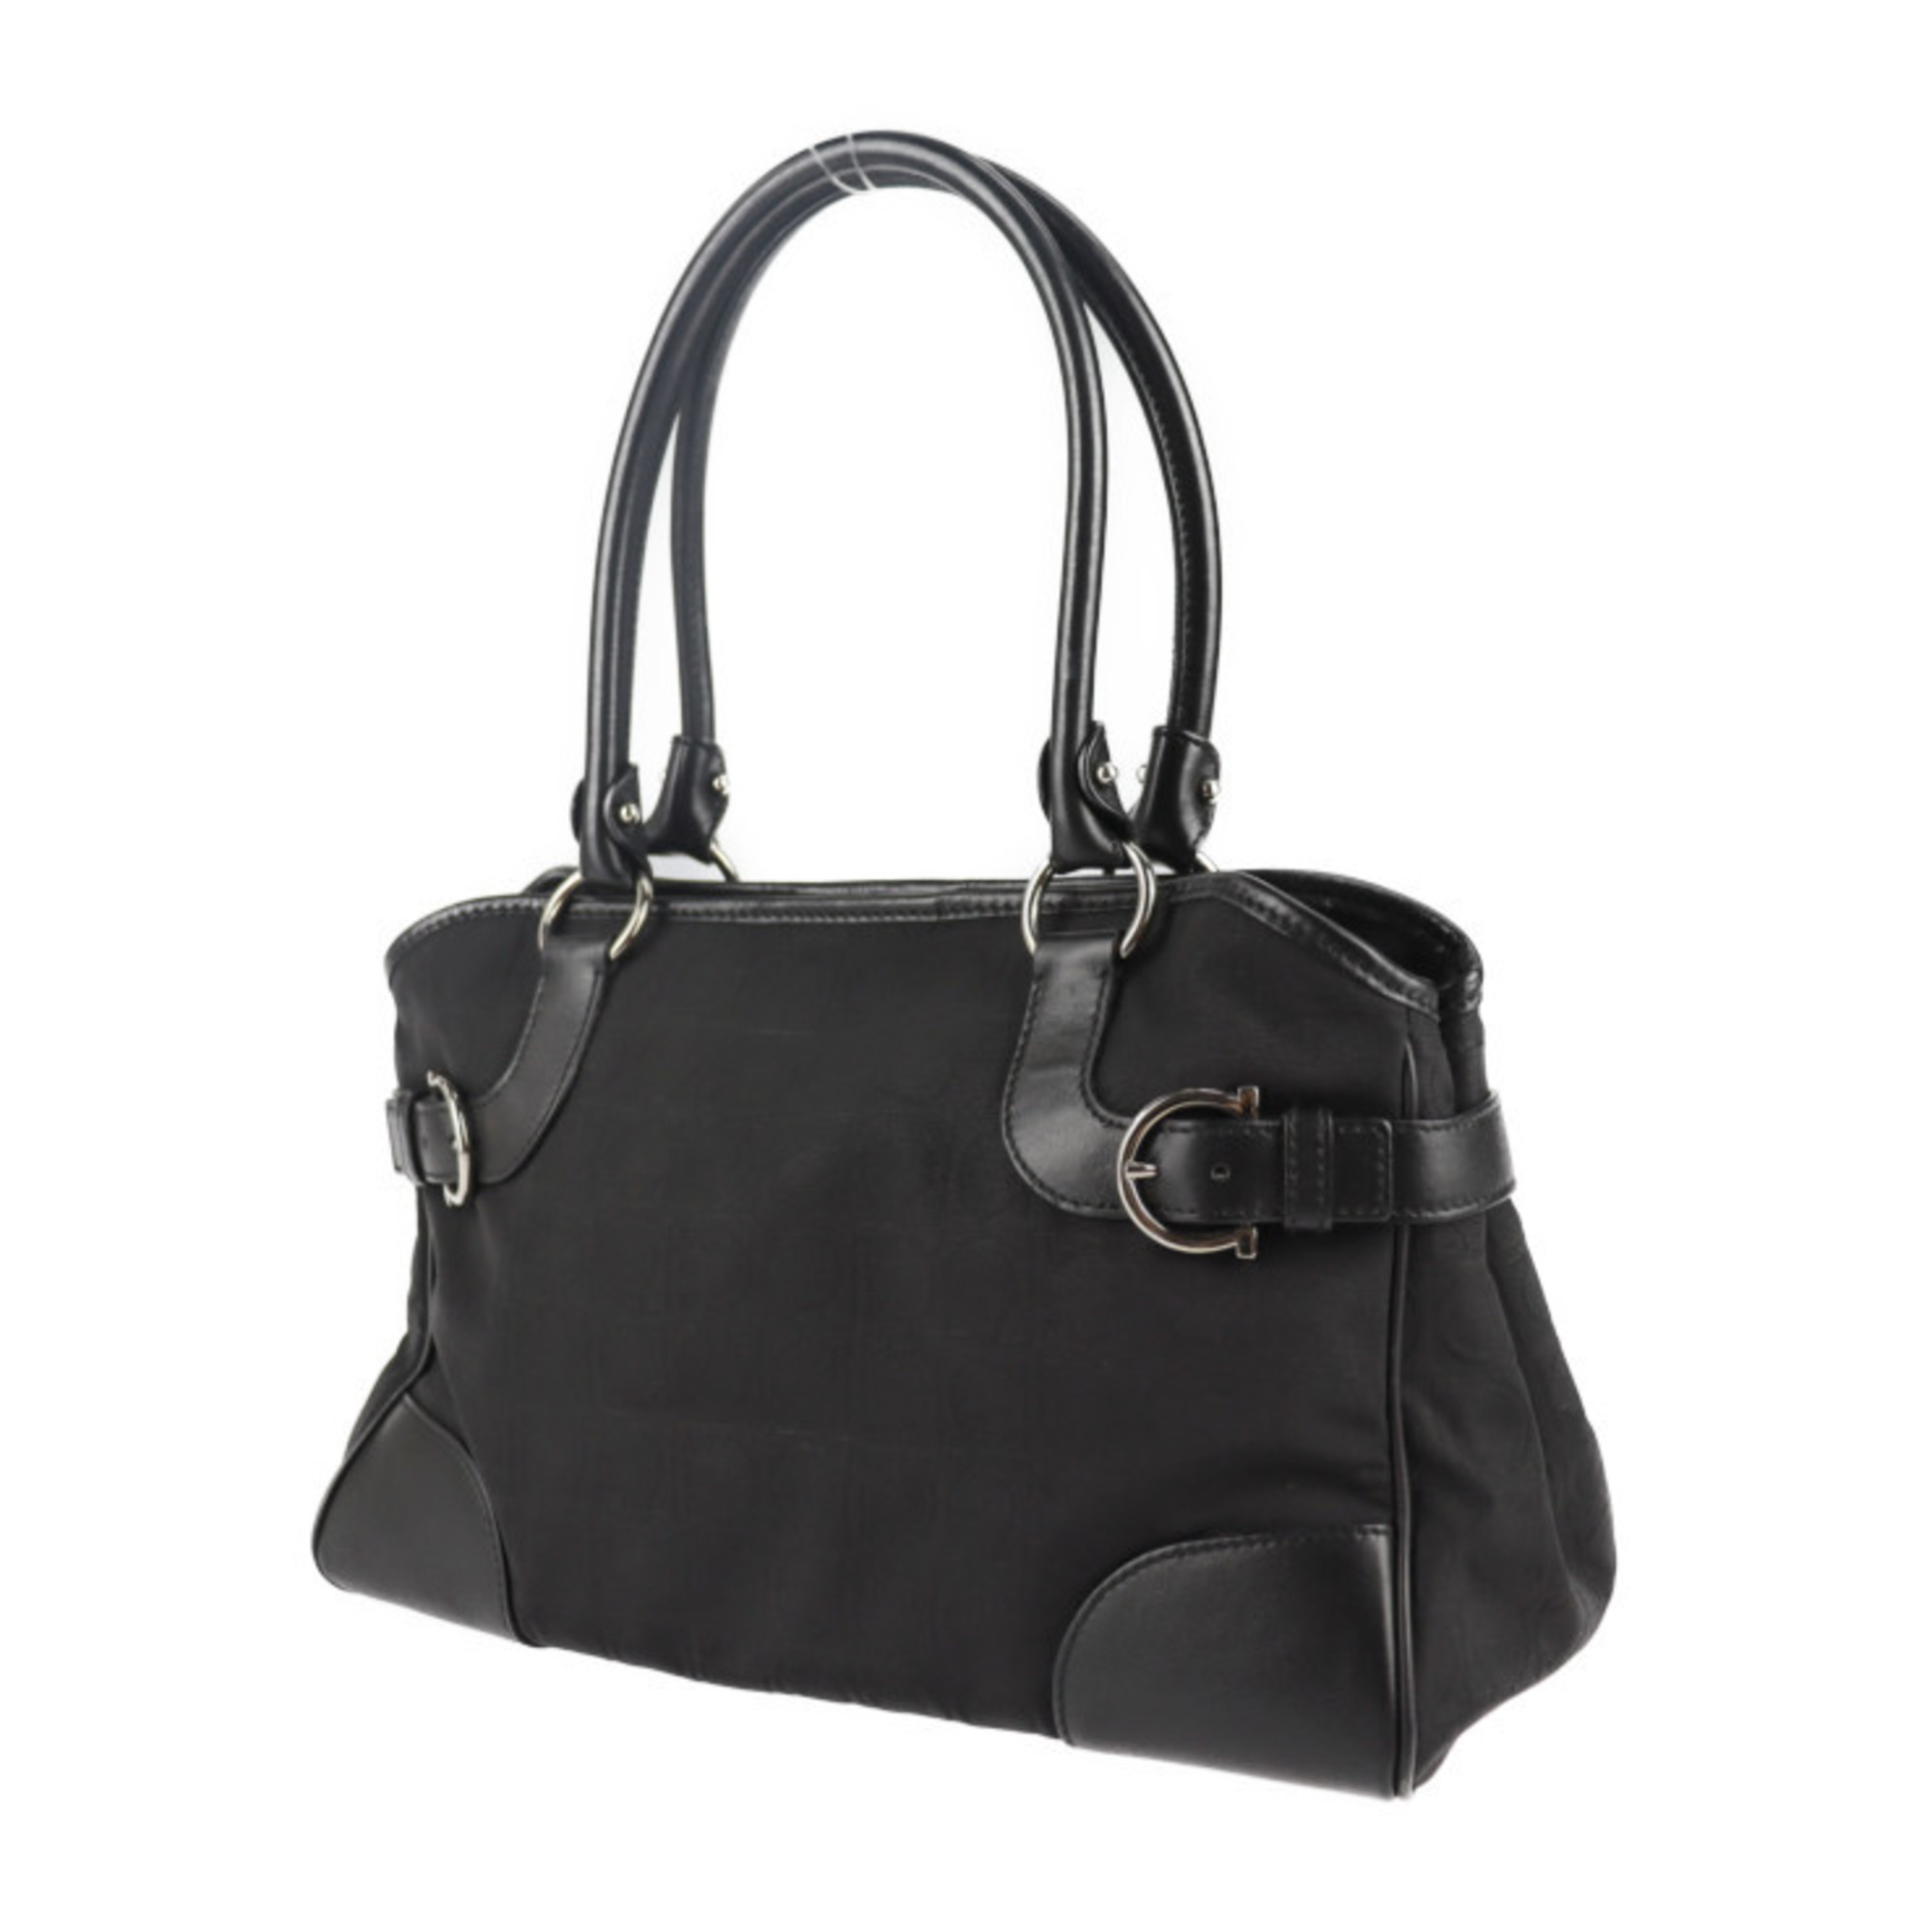 Salvatore Ferragamo Gancini shoulder bag 21 4911 canvas leather black silver hardware handbag